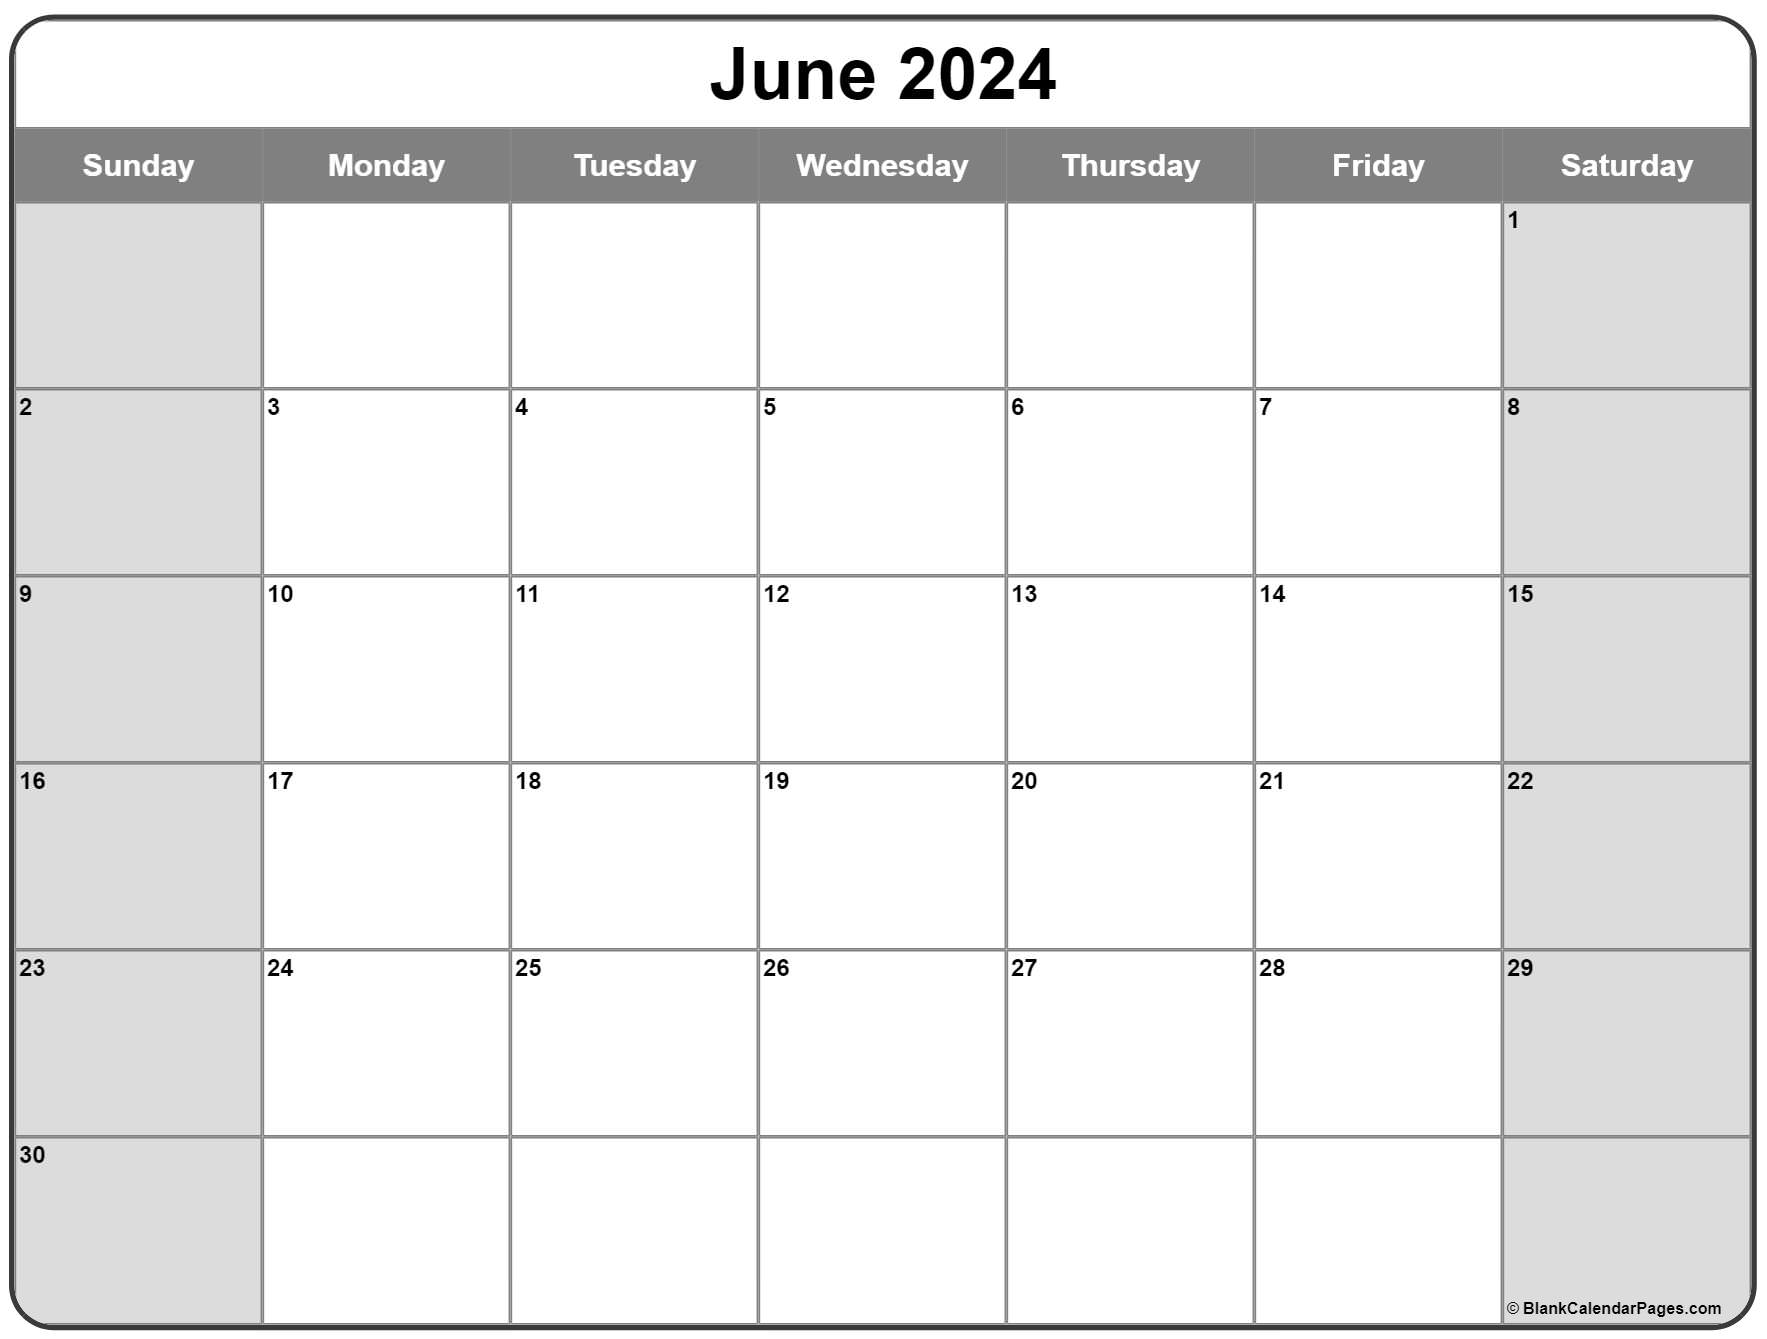 june 2023 calendar free printable calendar june 2023 calendar